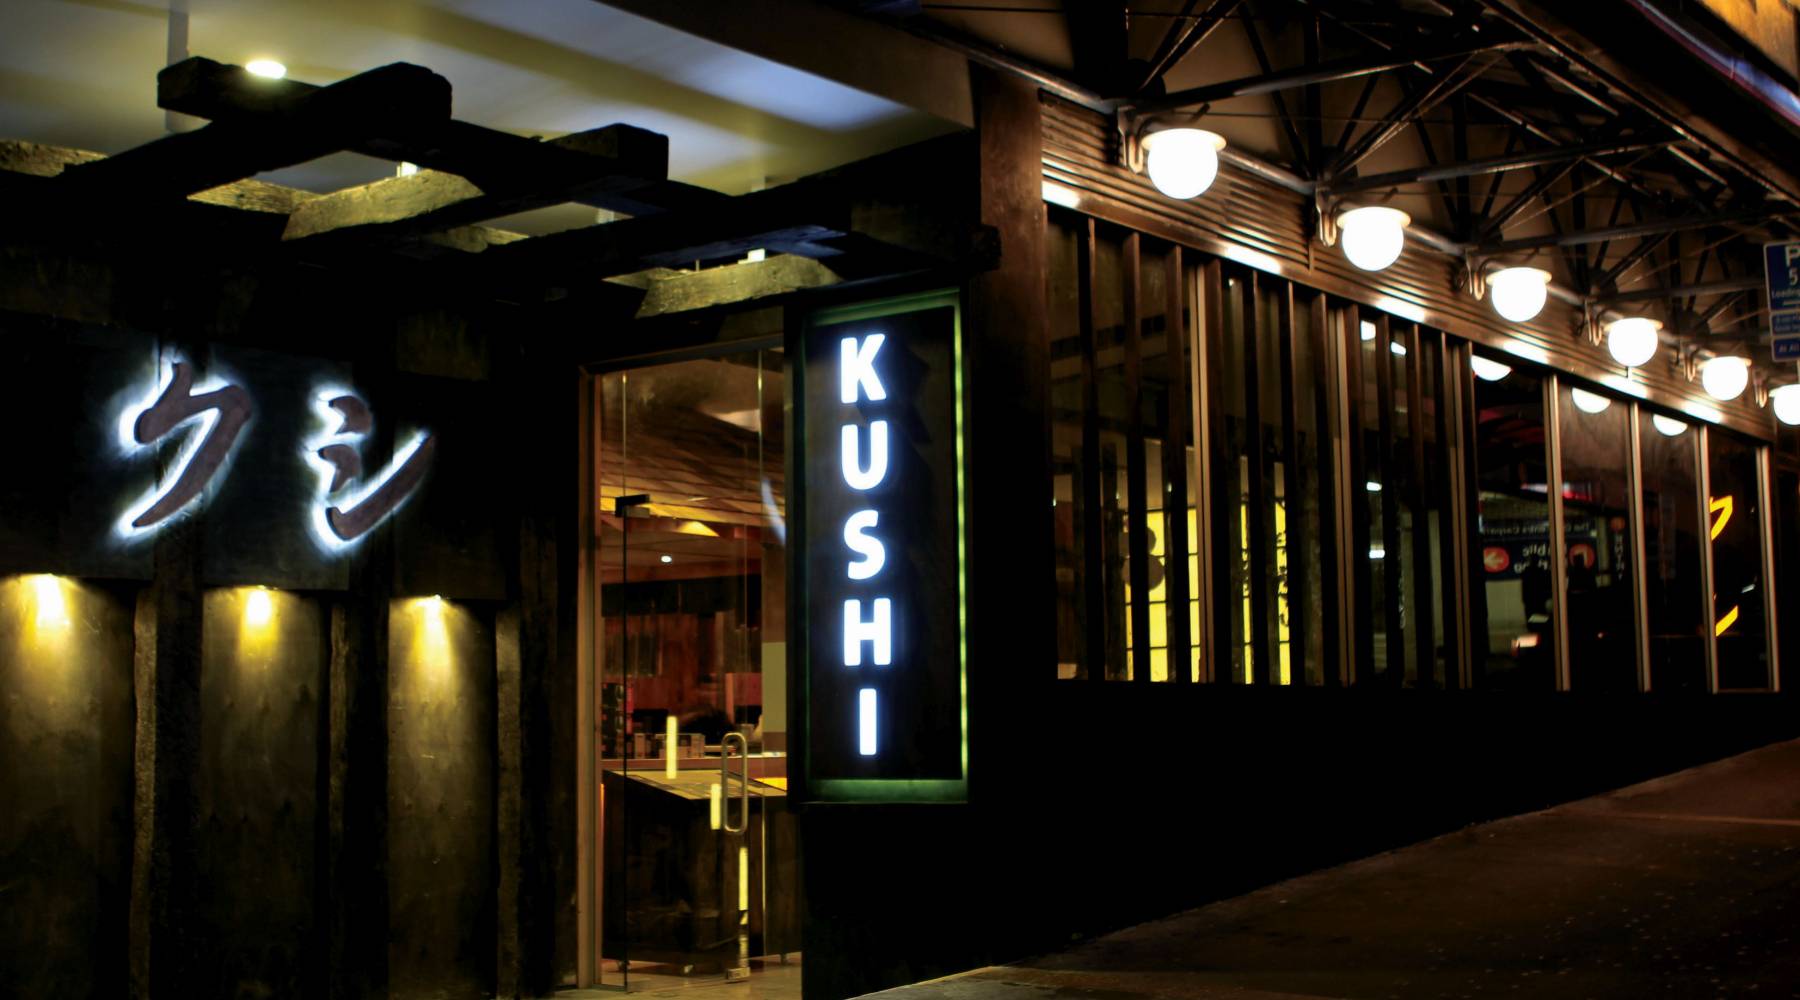 Kushi Japanese Kitchen Bar Auckland Restaurants Heart Of The City